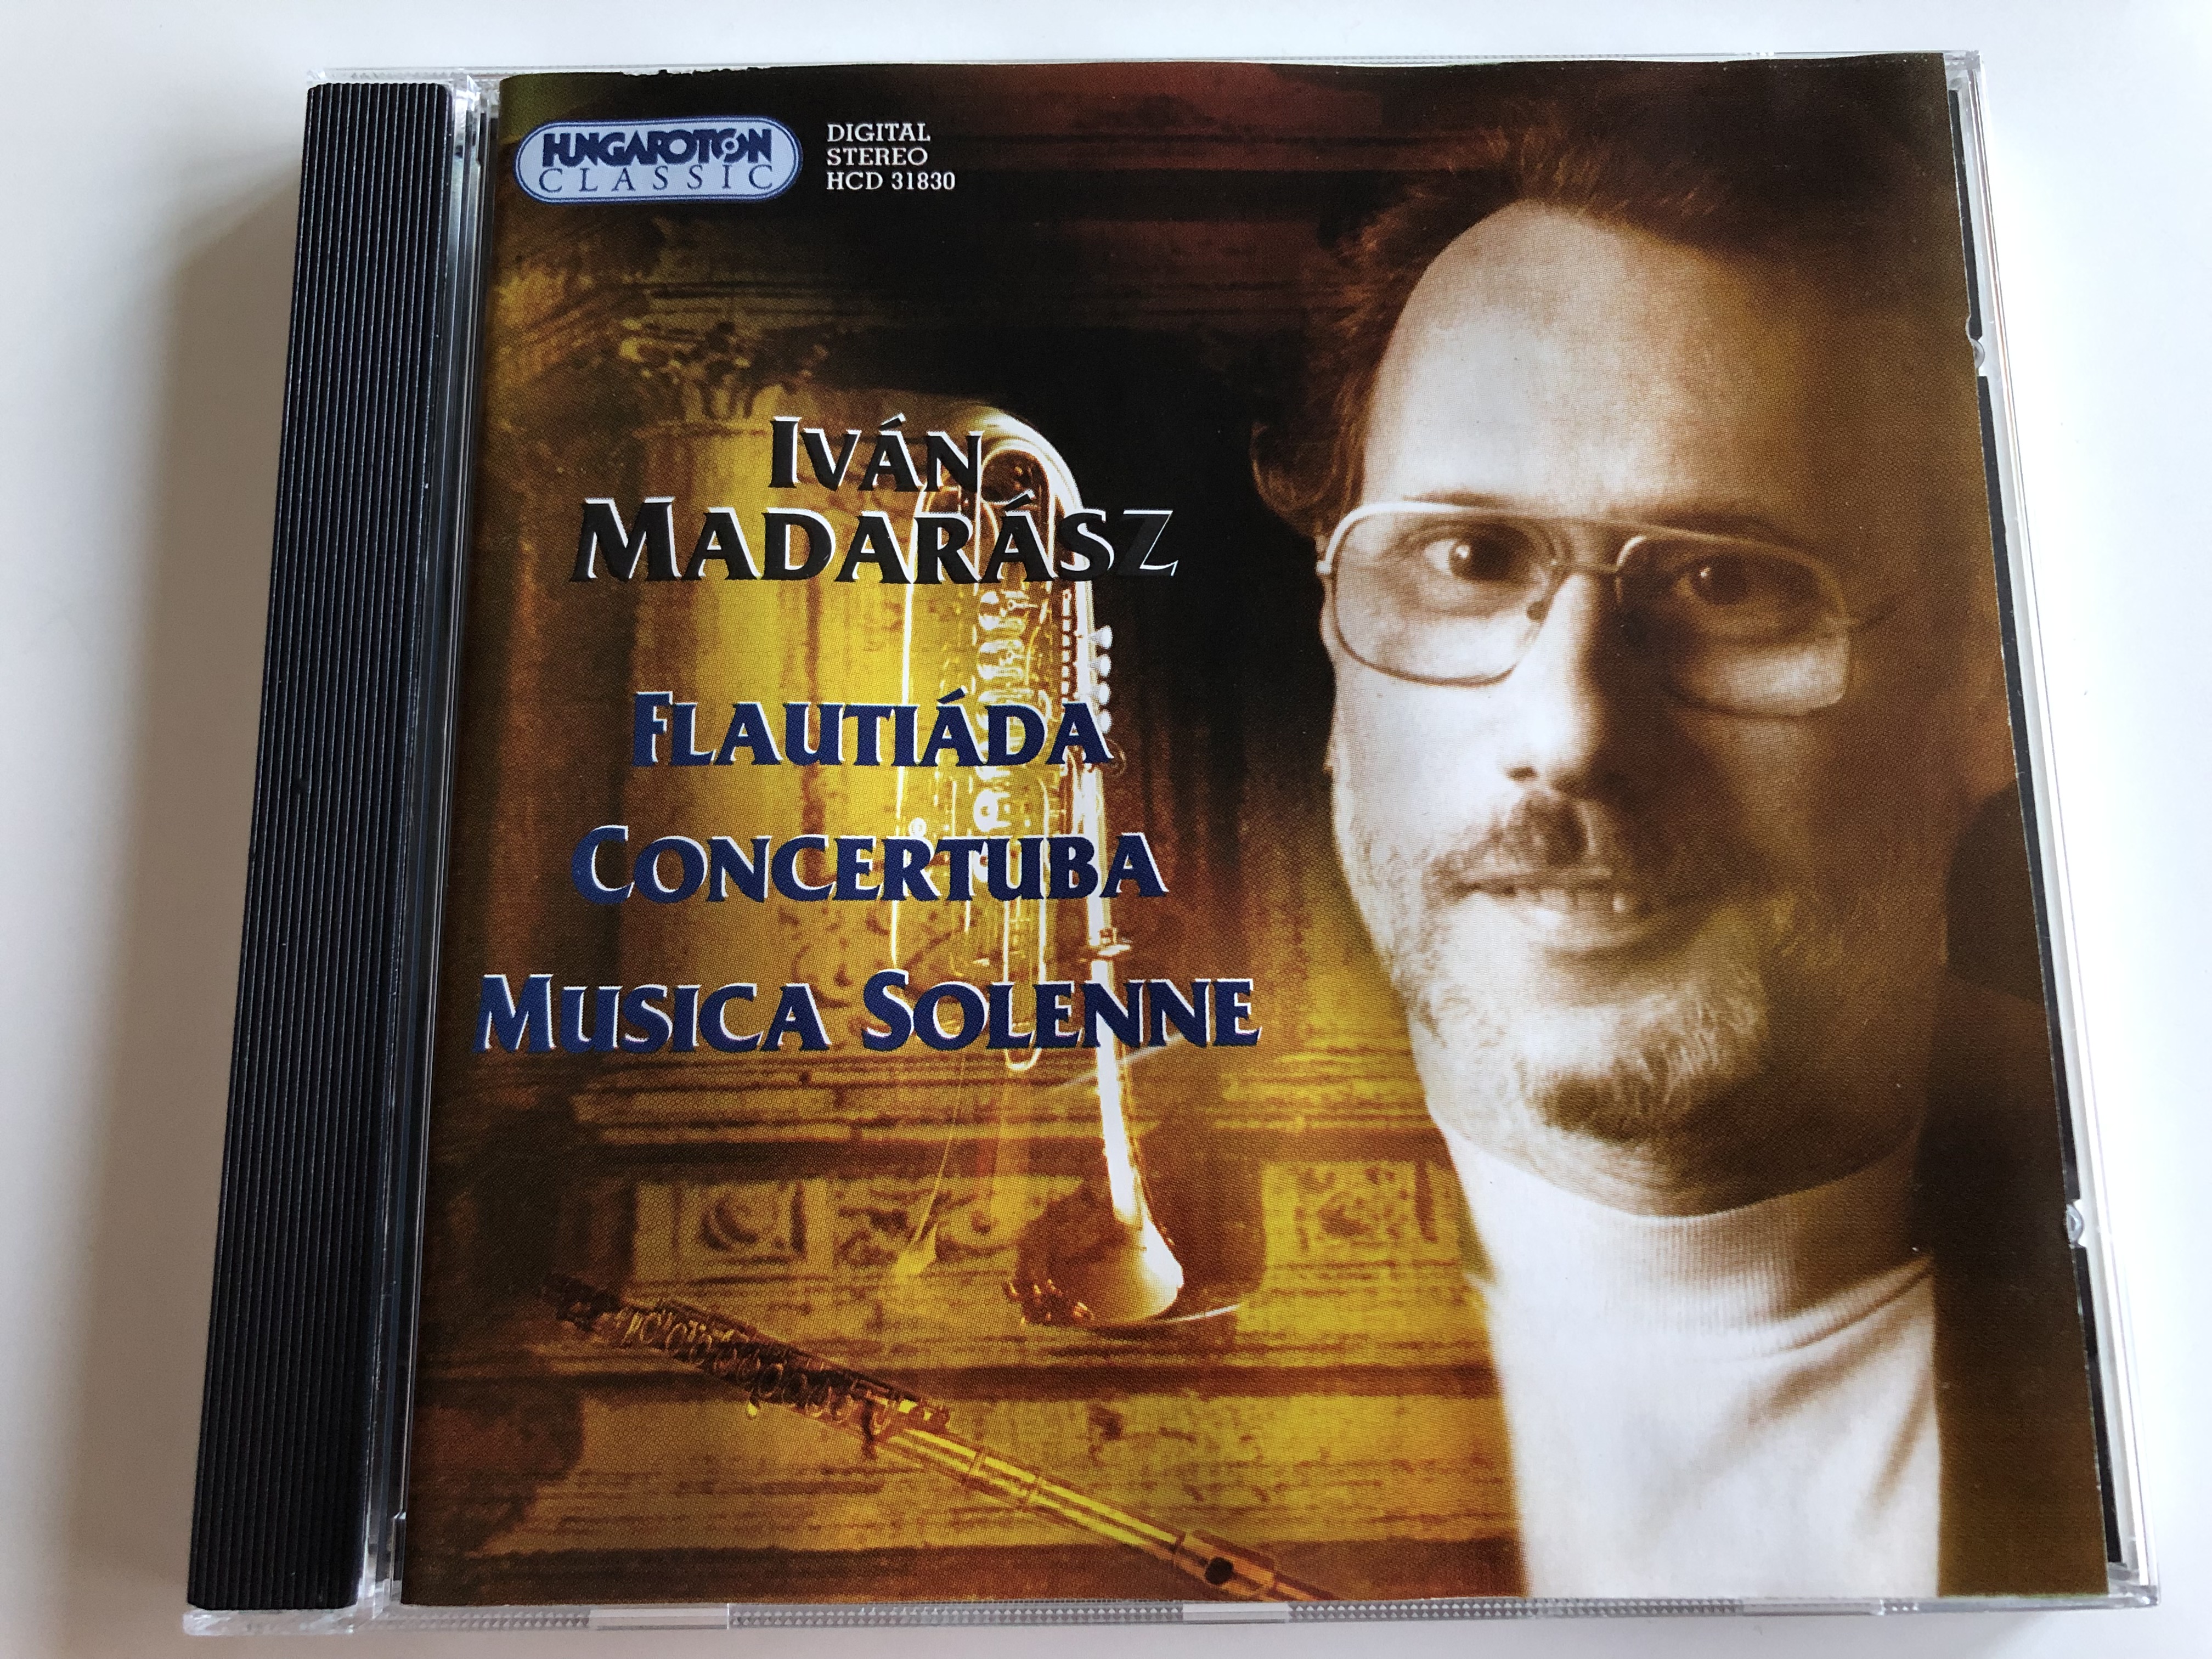 ivan-madarasz-flautiada-concertuba-musica-solenne-hungaroton-classic-audio-cd-1999-stereo-hcd-31830-1-.jpg